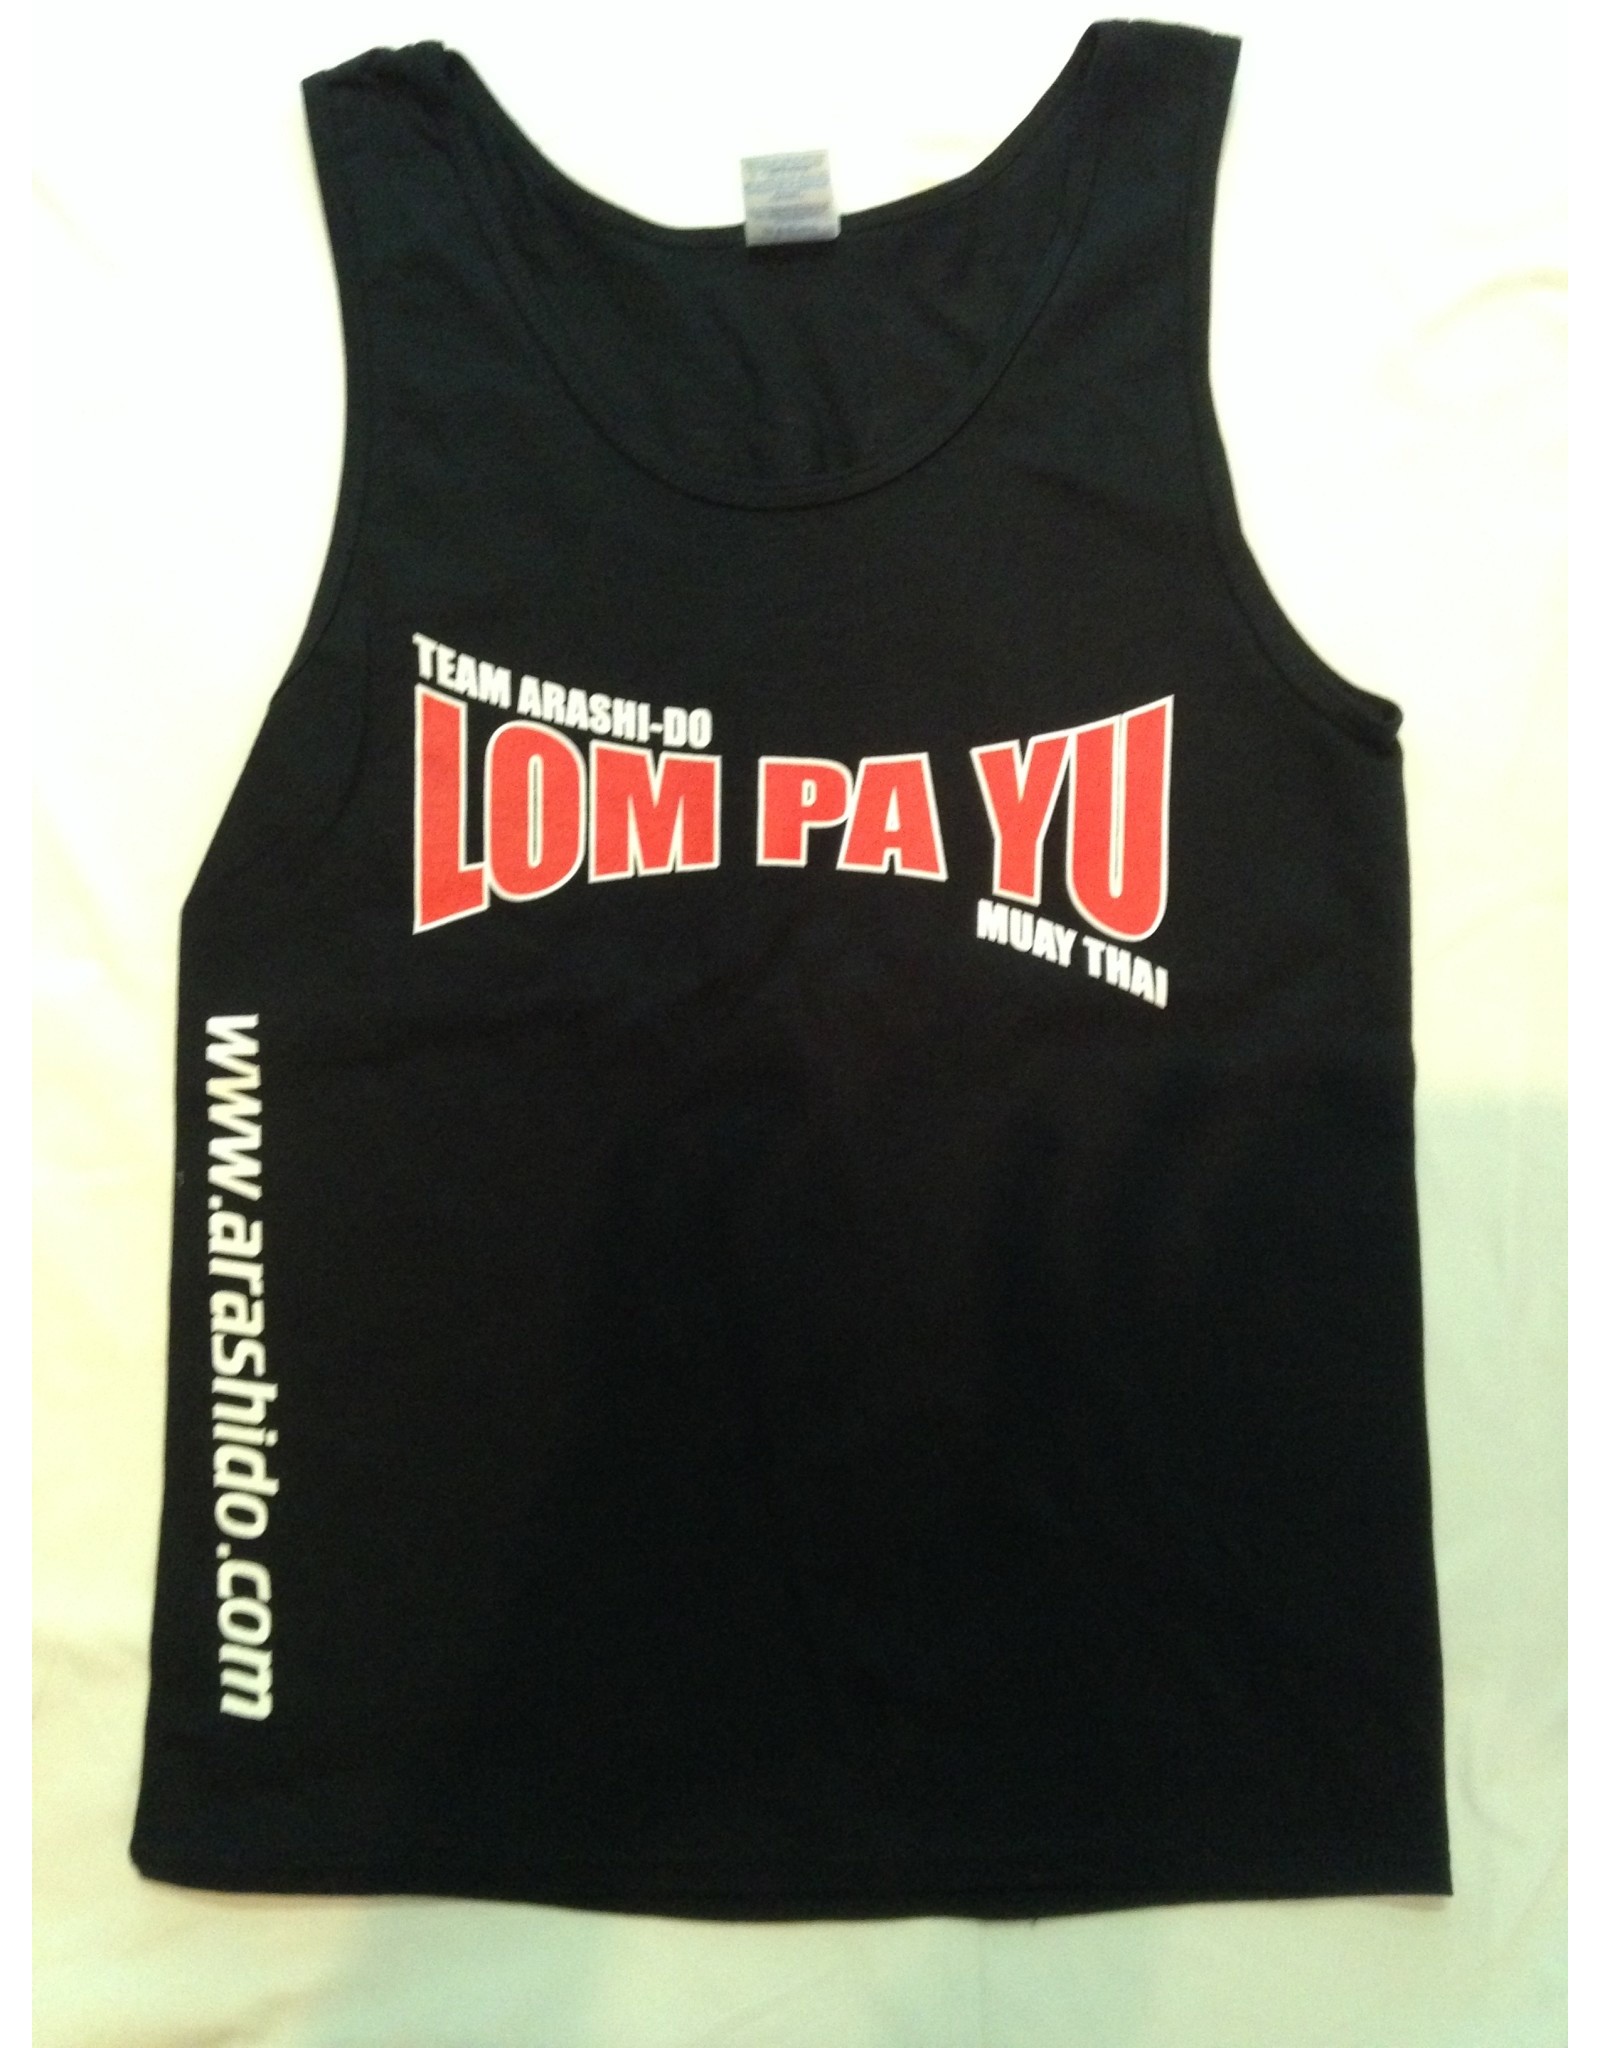 Lom Pa Yu Shirts Men's Lom Pa Yu Tank